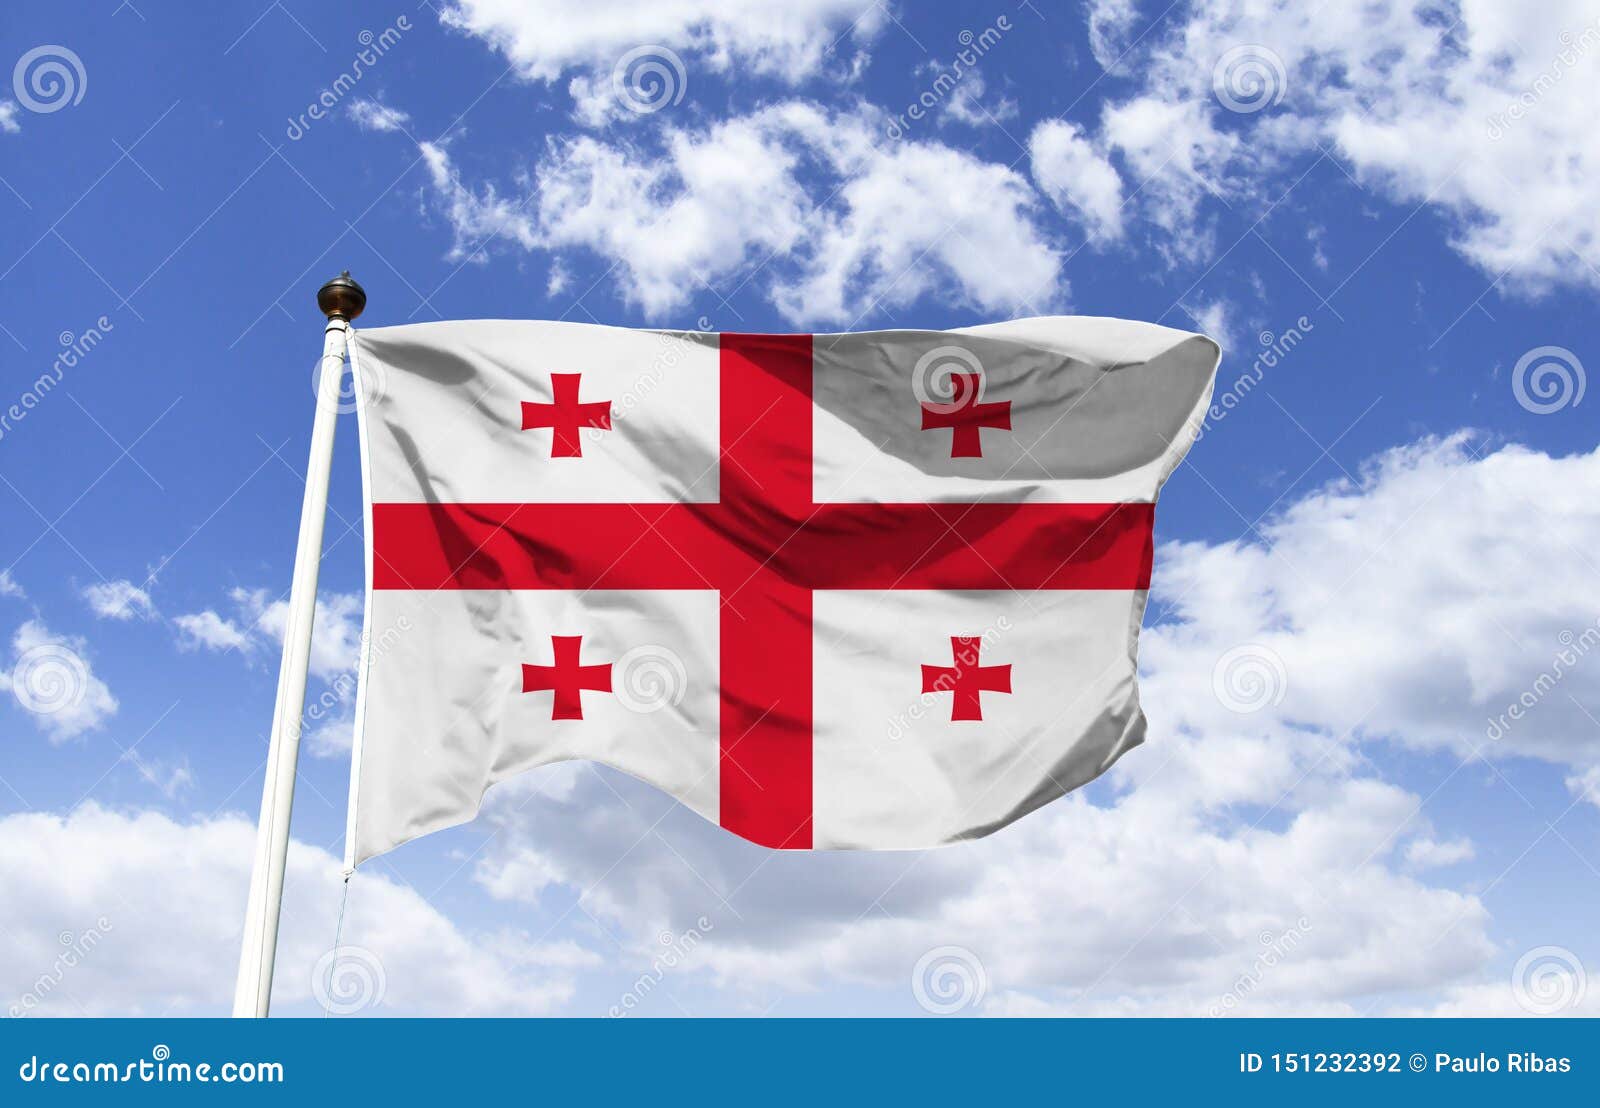 Grand krøllet nuttet Flag of Georgia, Flag of the Five Crosses Stock Photo - Image of flag,  crusaders: 151232392